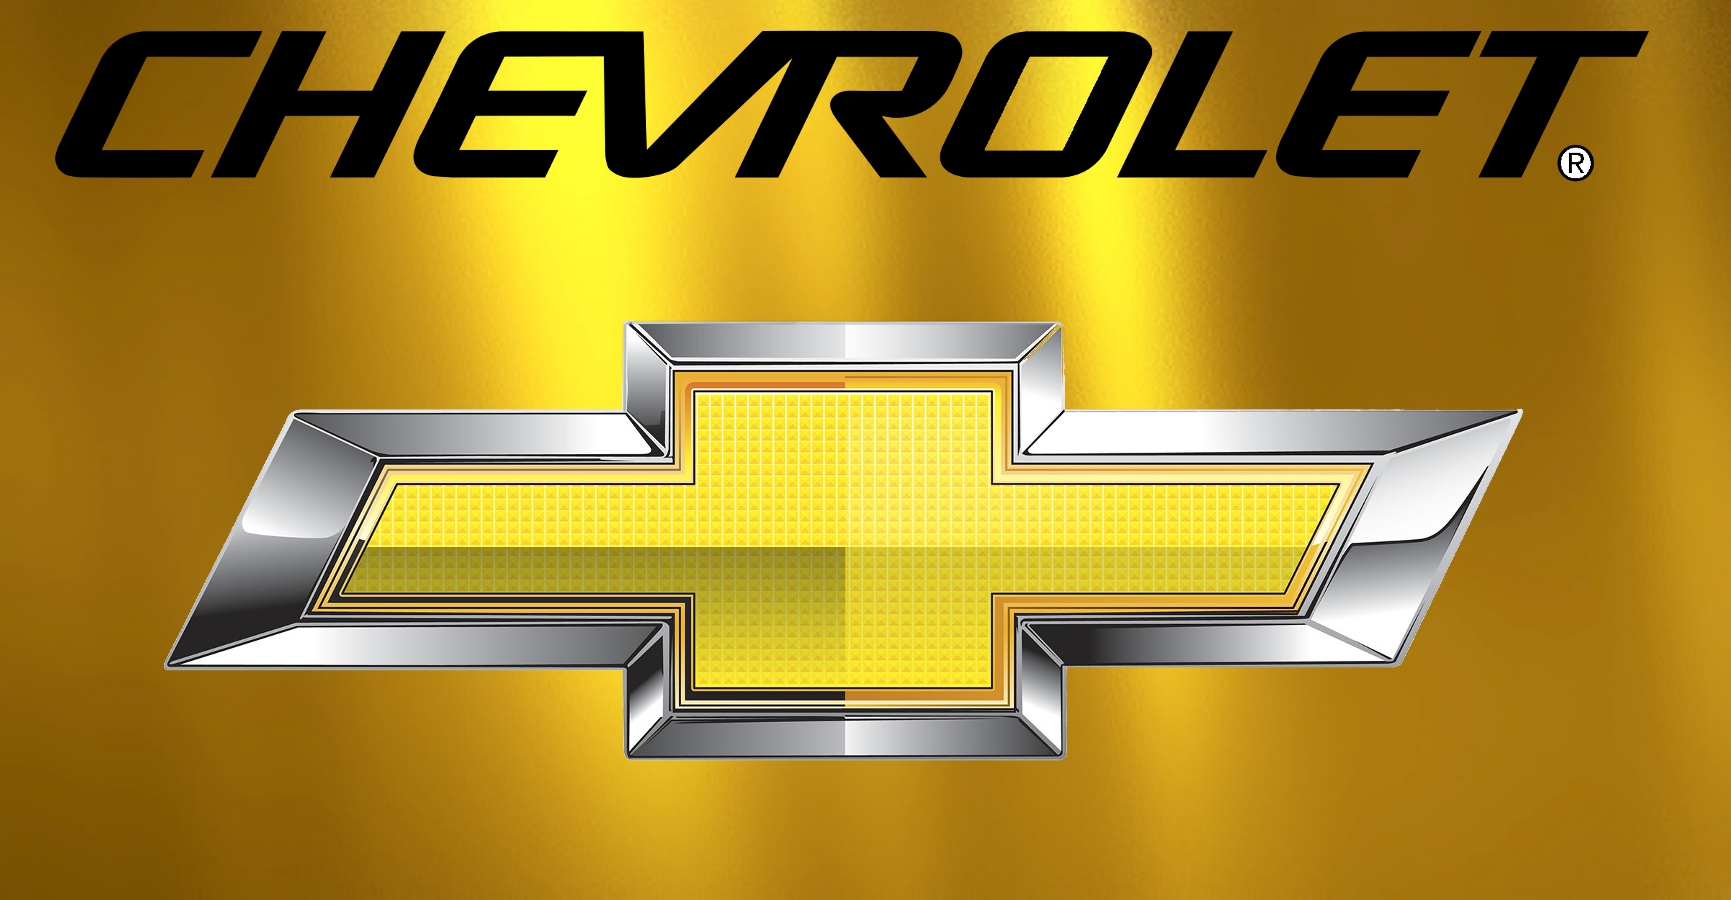 Chevy logos.jpg